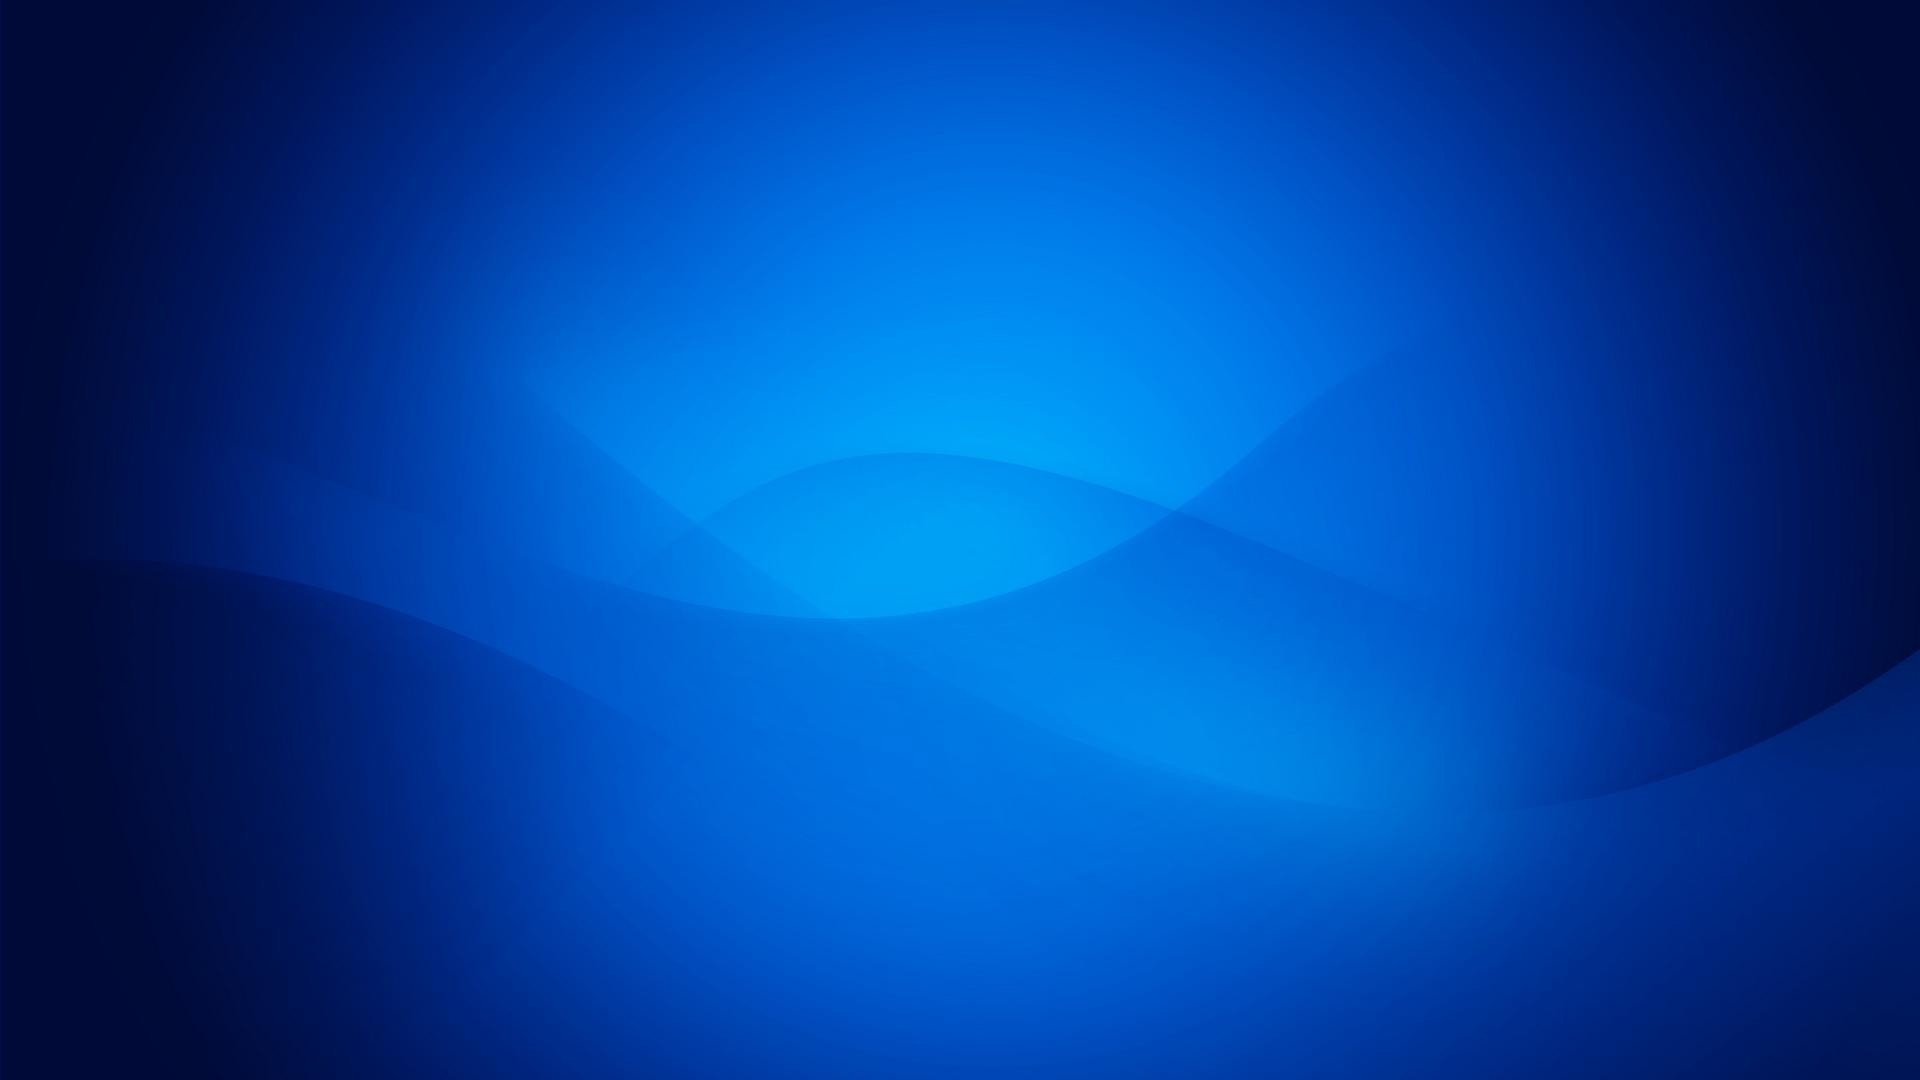 Blue Wallpaper For Background 15